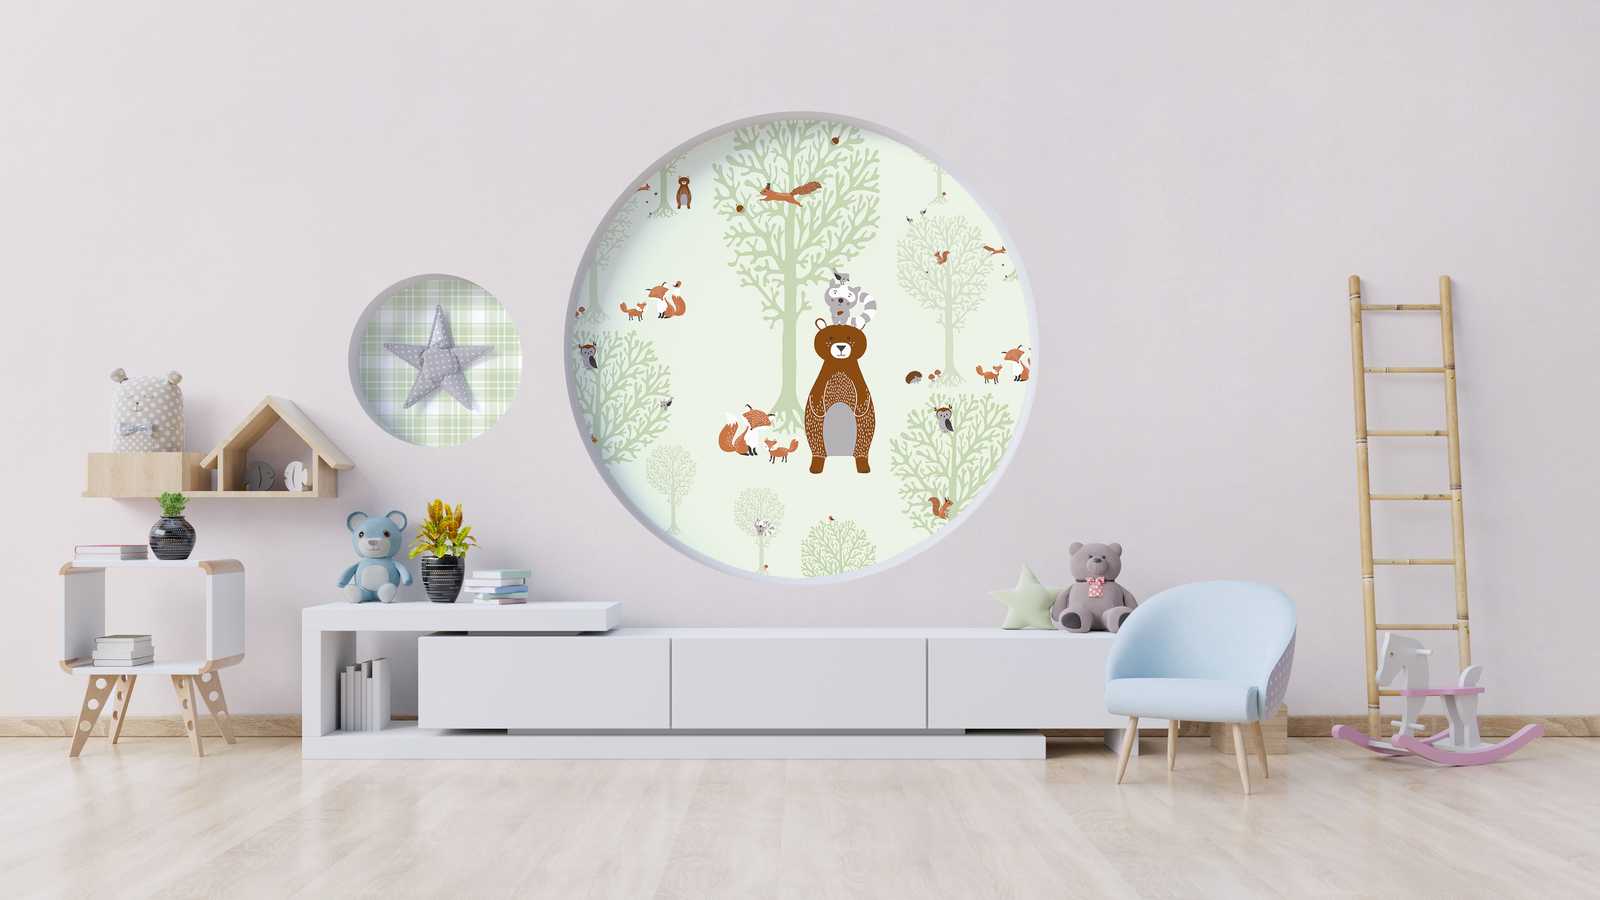             Nursery wallpaper boys forest animals - green, brown, grey
        